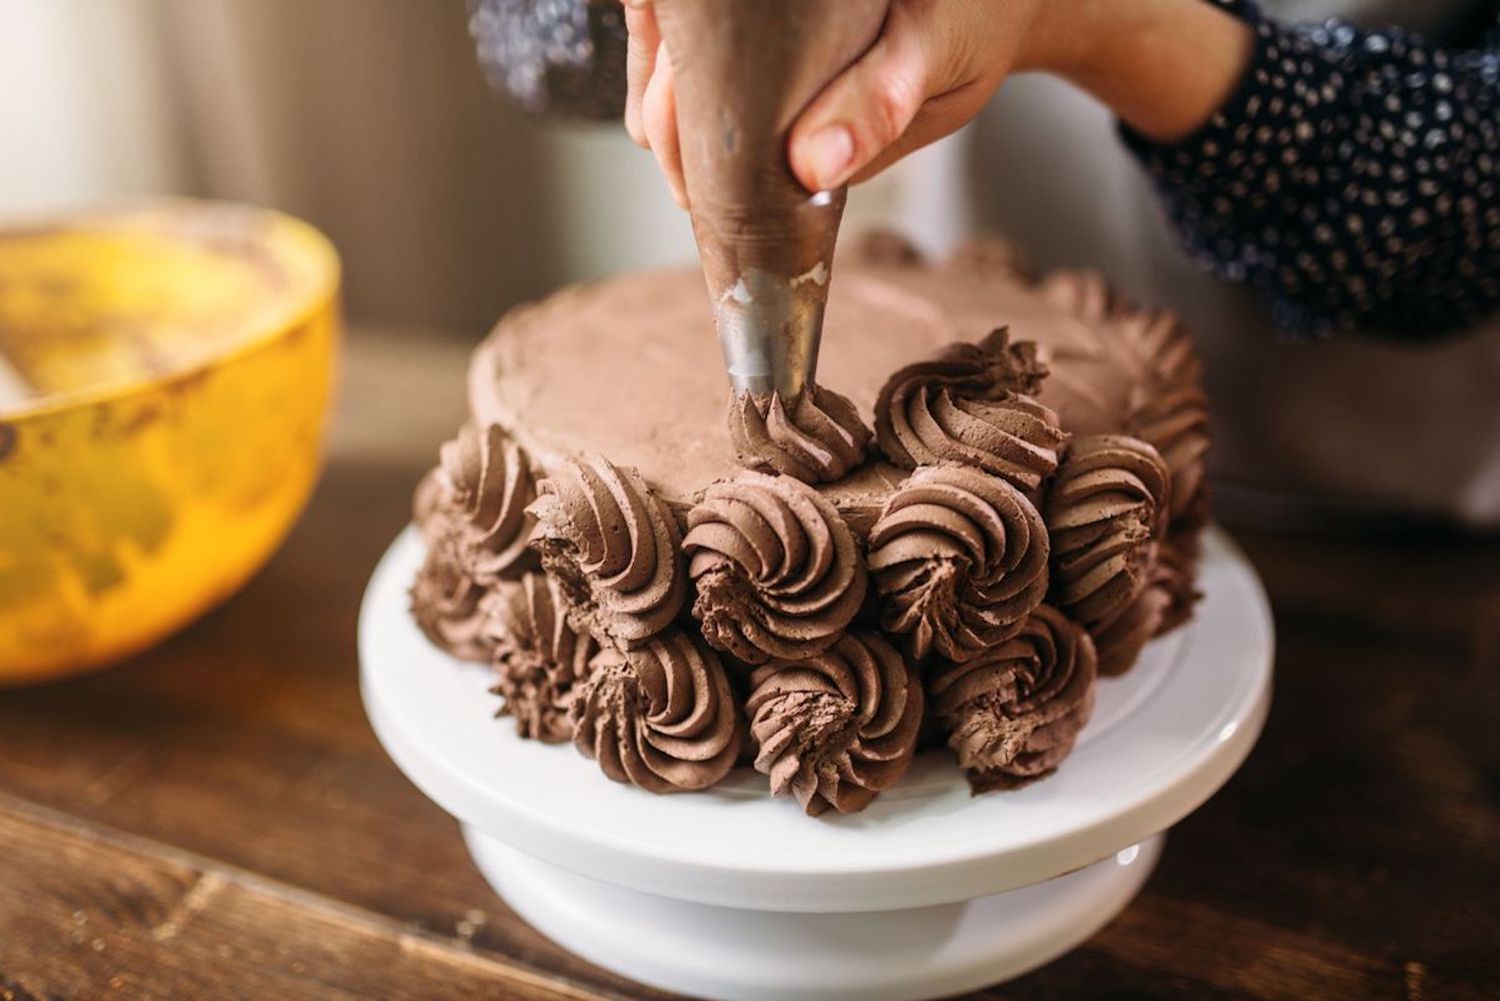 a hand decorating a chocolate cake